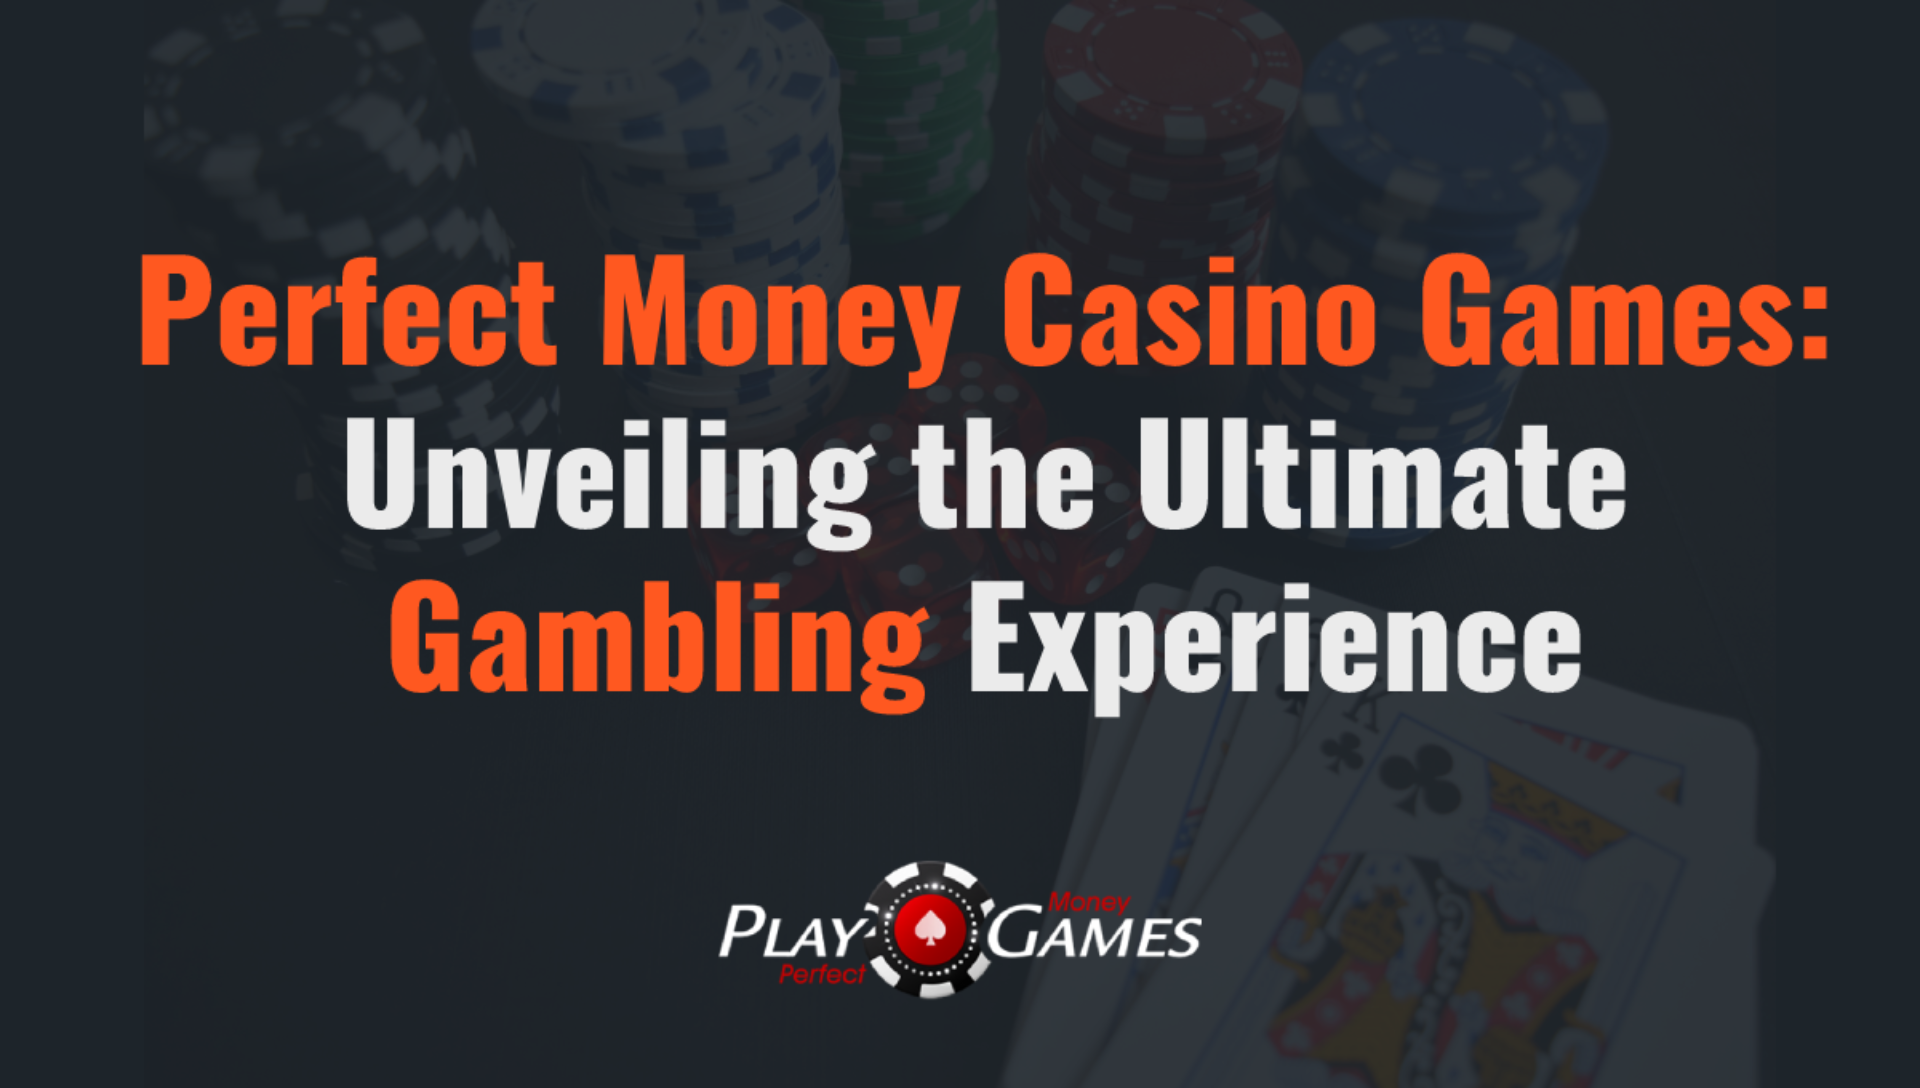 Perfect Money Casino Games - playperfectmoneygames.com